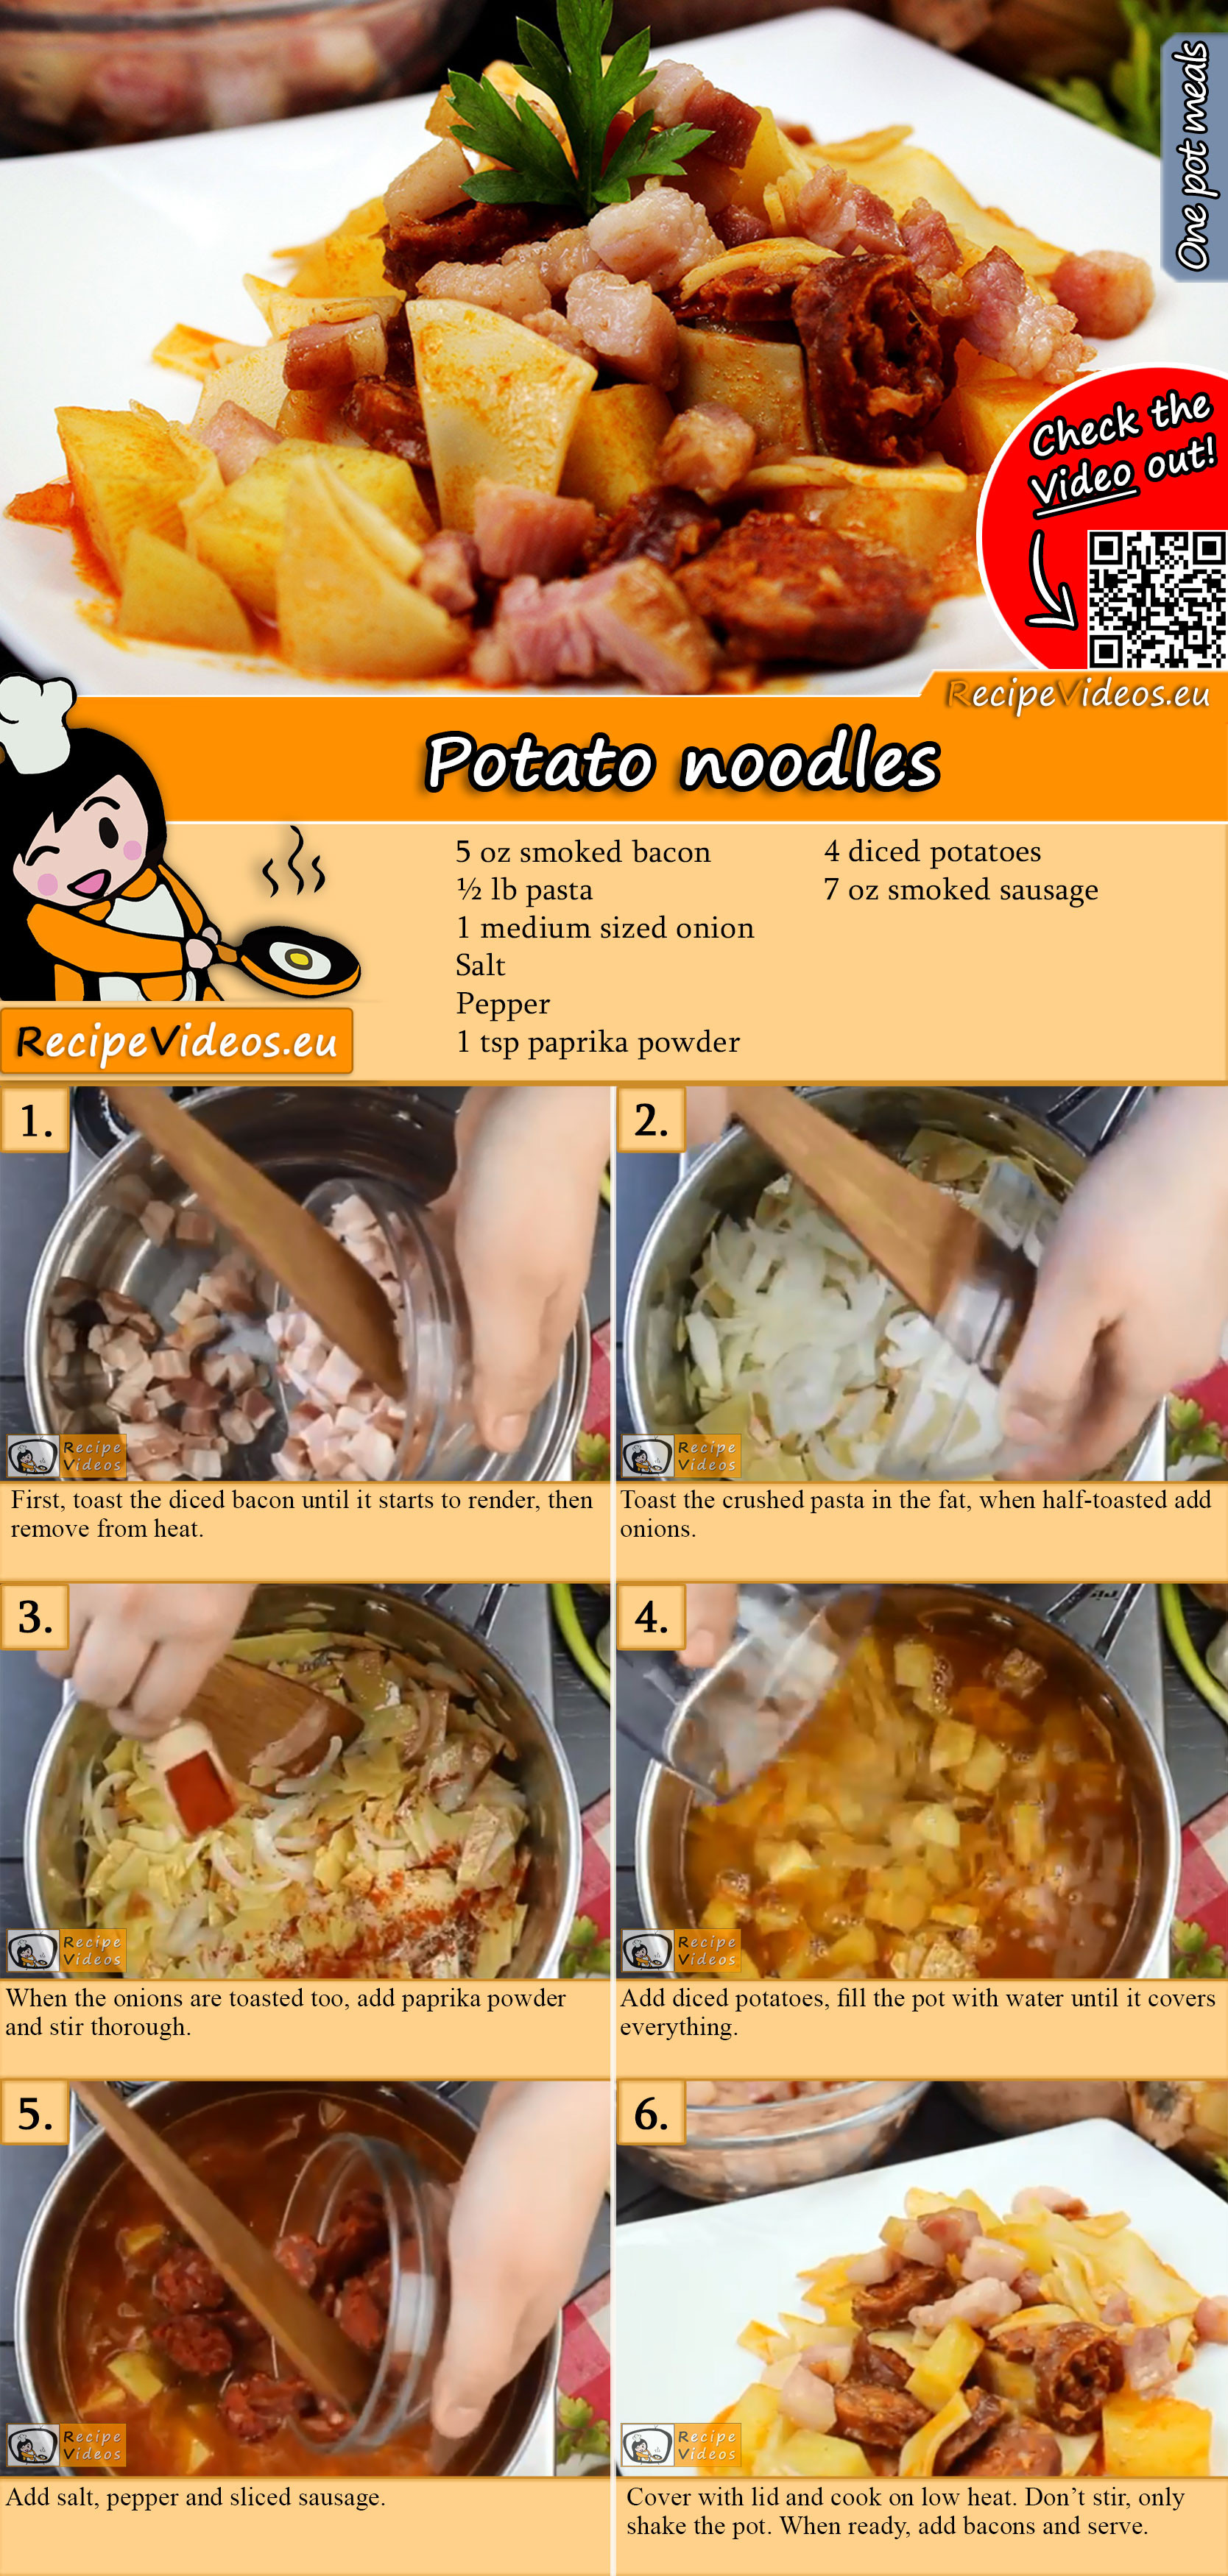 Potato noodles recipe with video